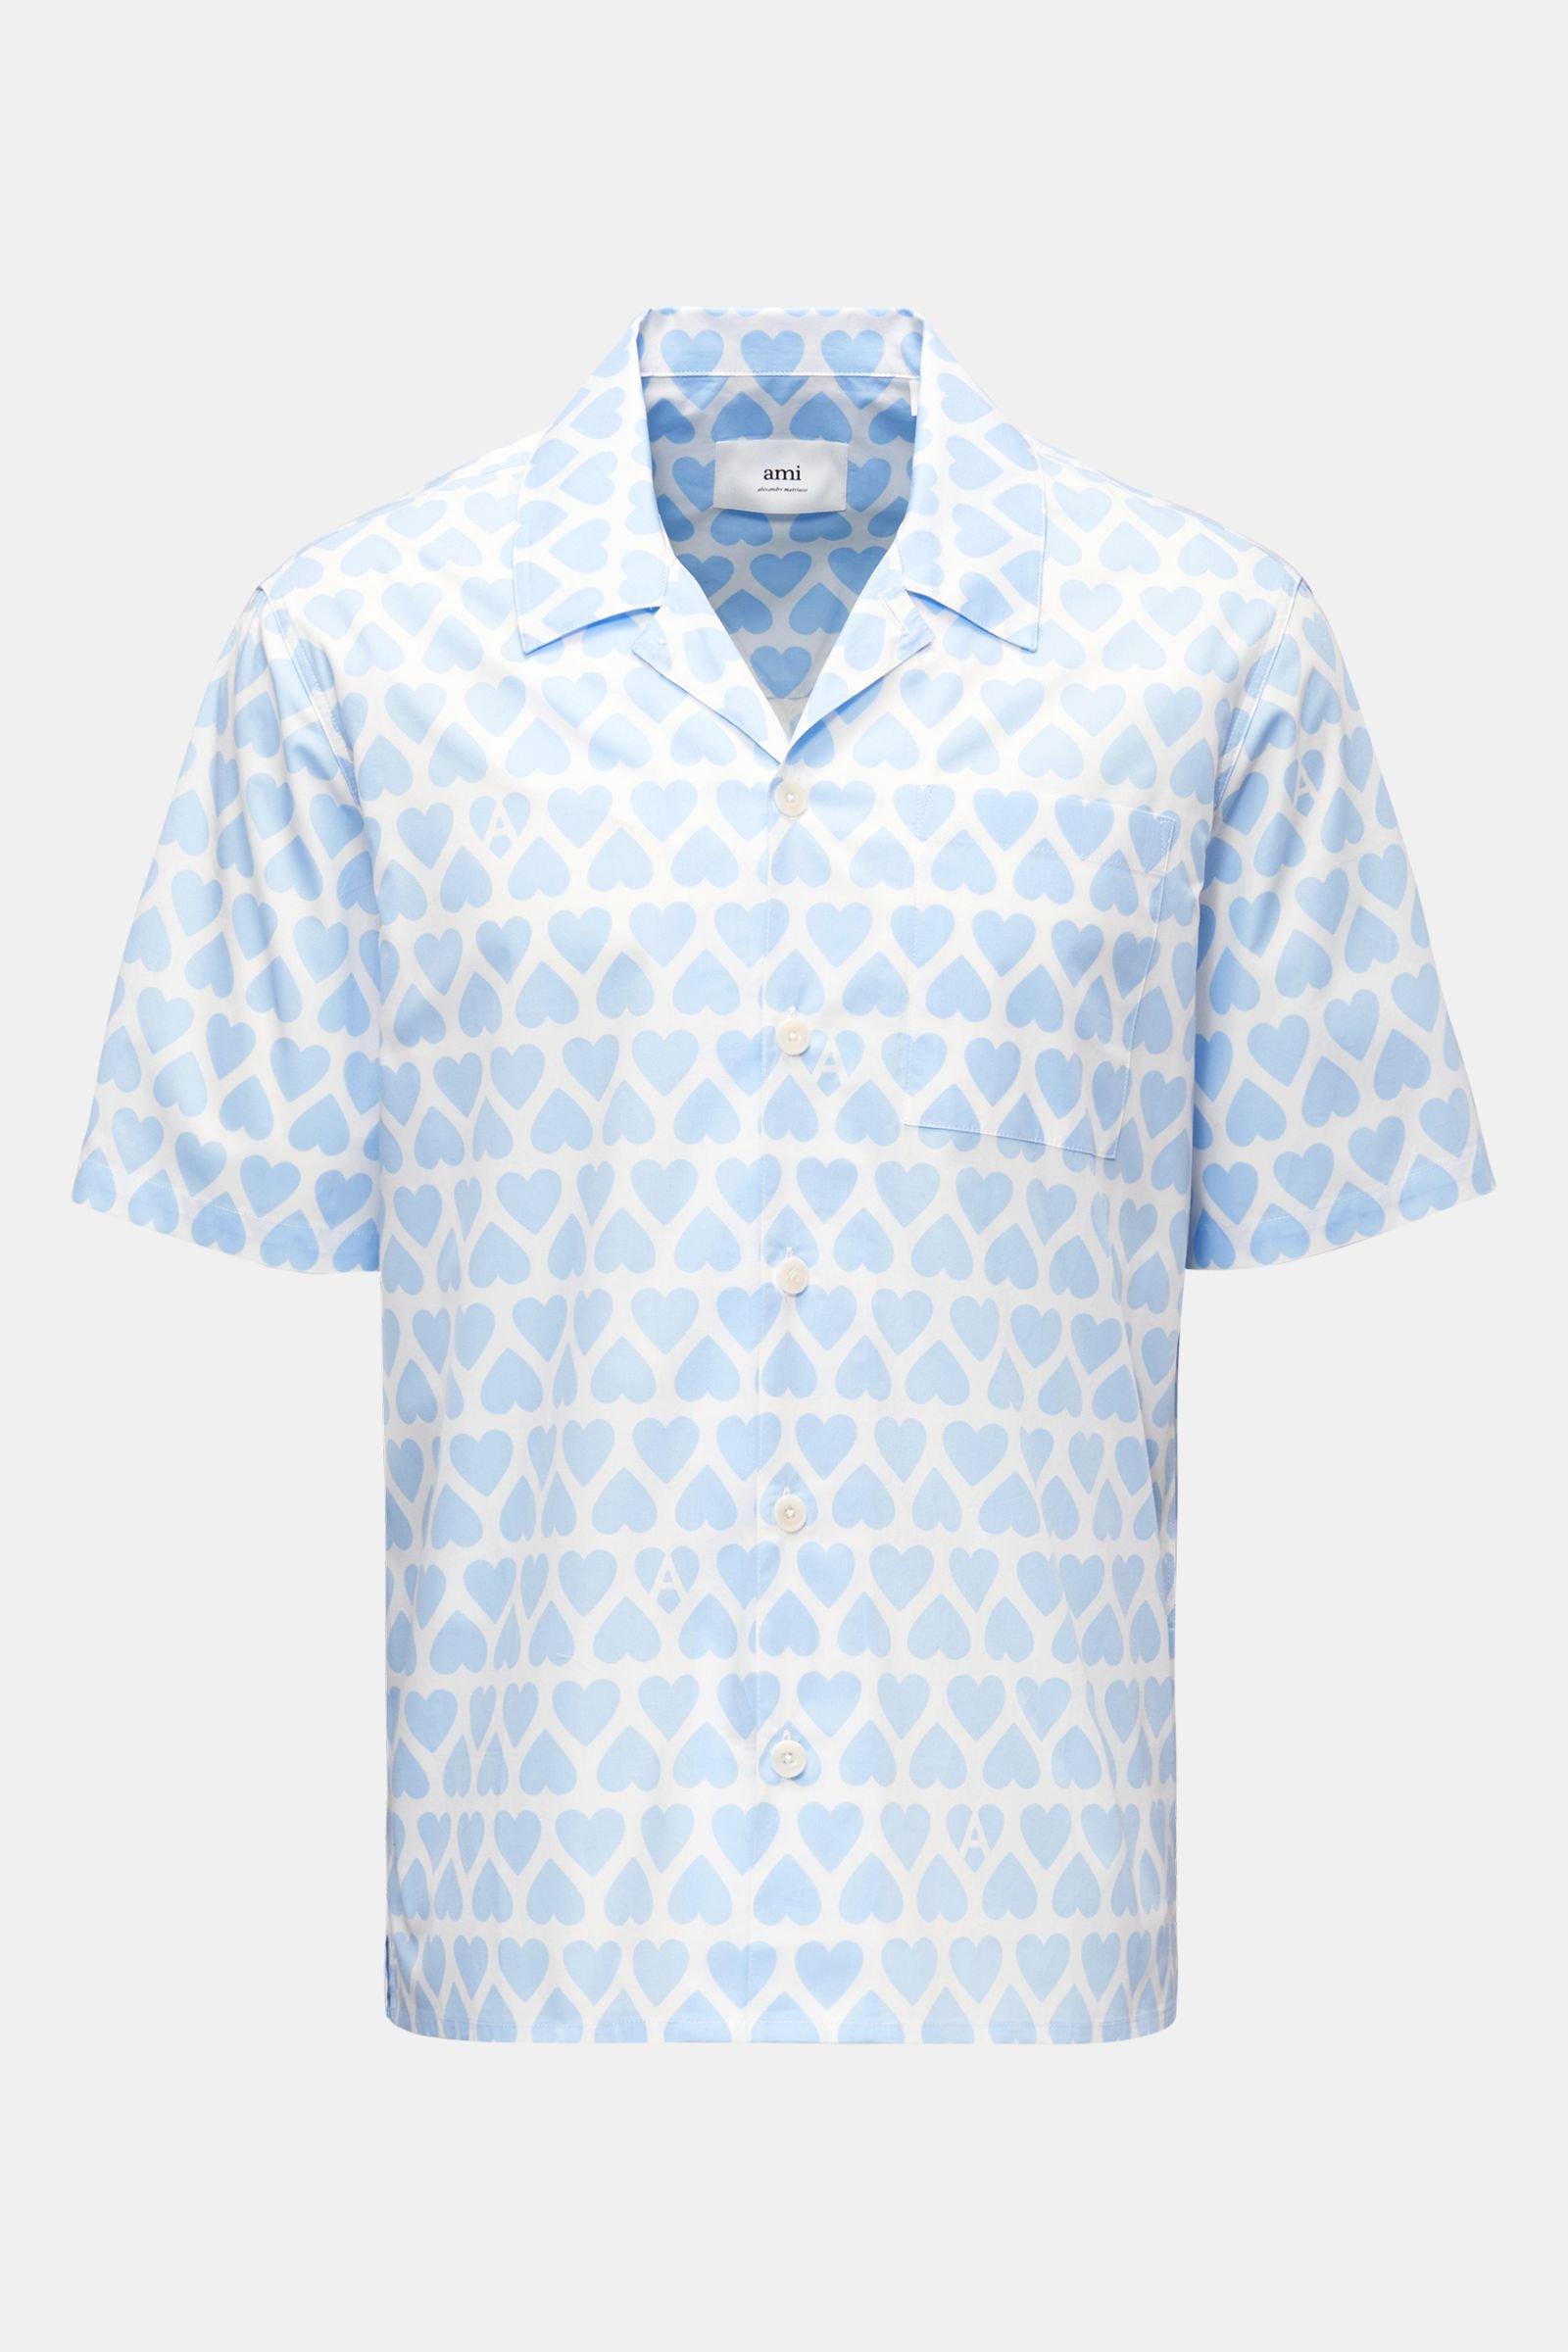 Short sleeve shirt Cuban collar light blue/white patterned